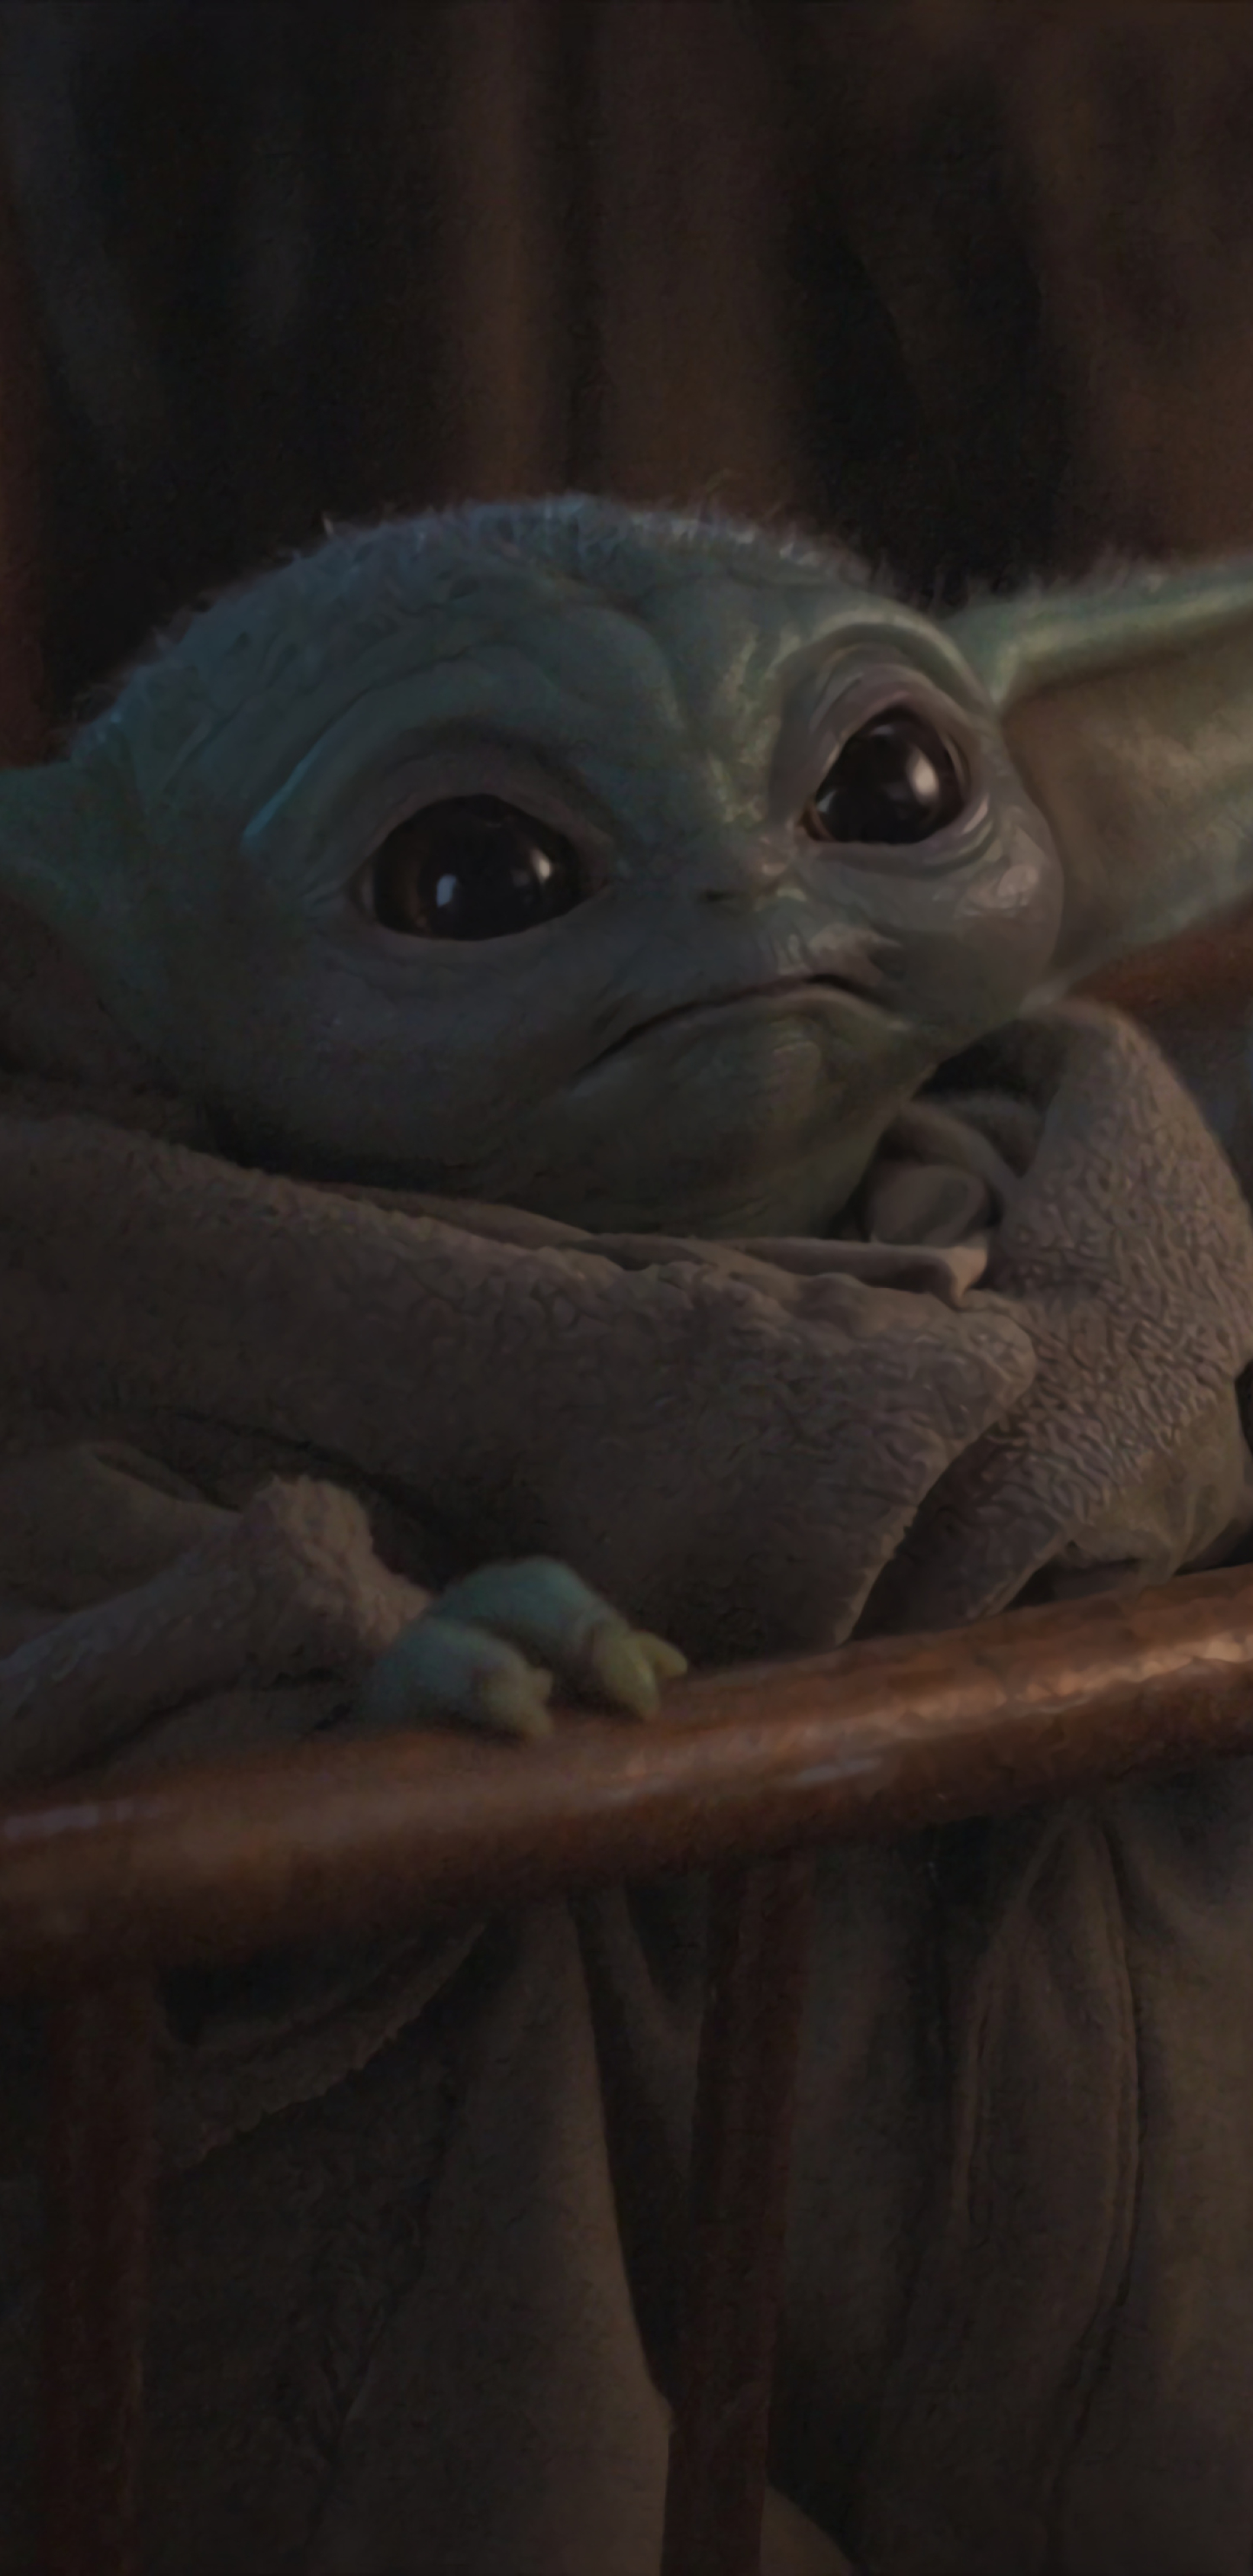 Cute Baby Yoda from Mandalorian Samsung Galaxy